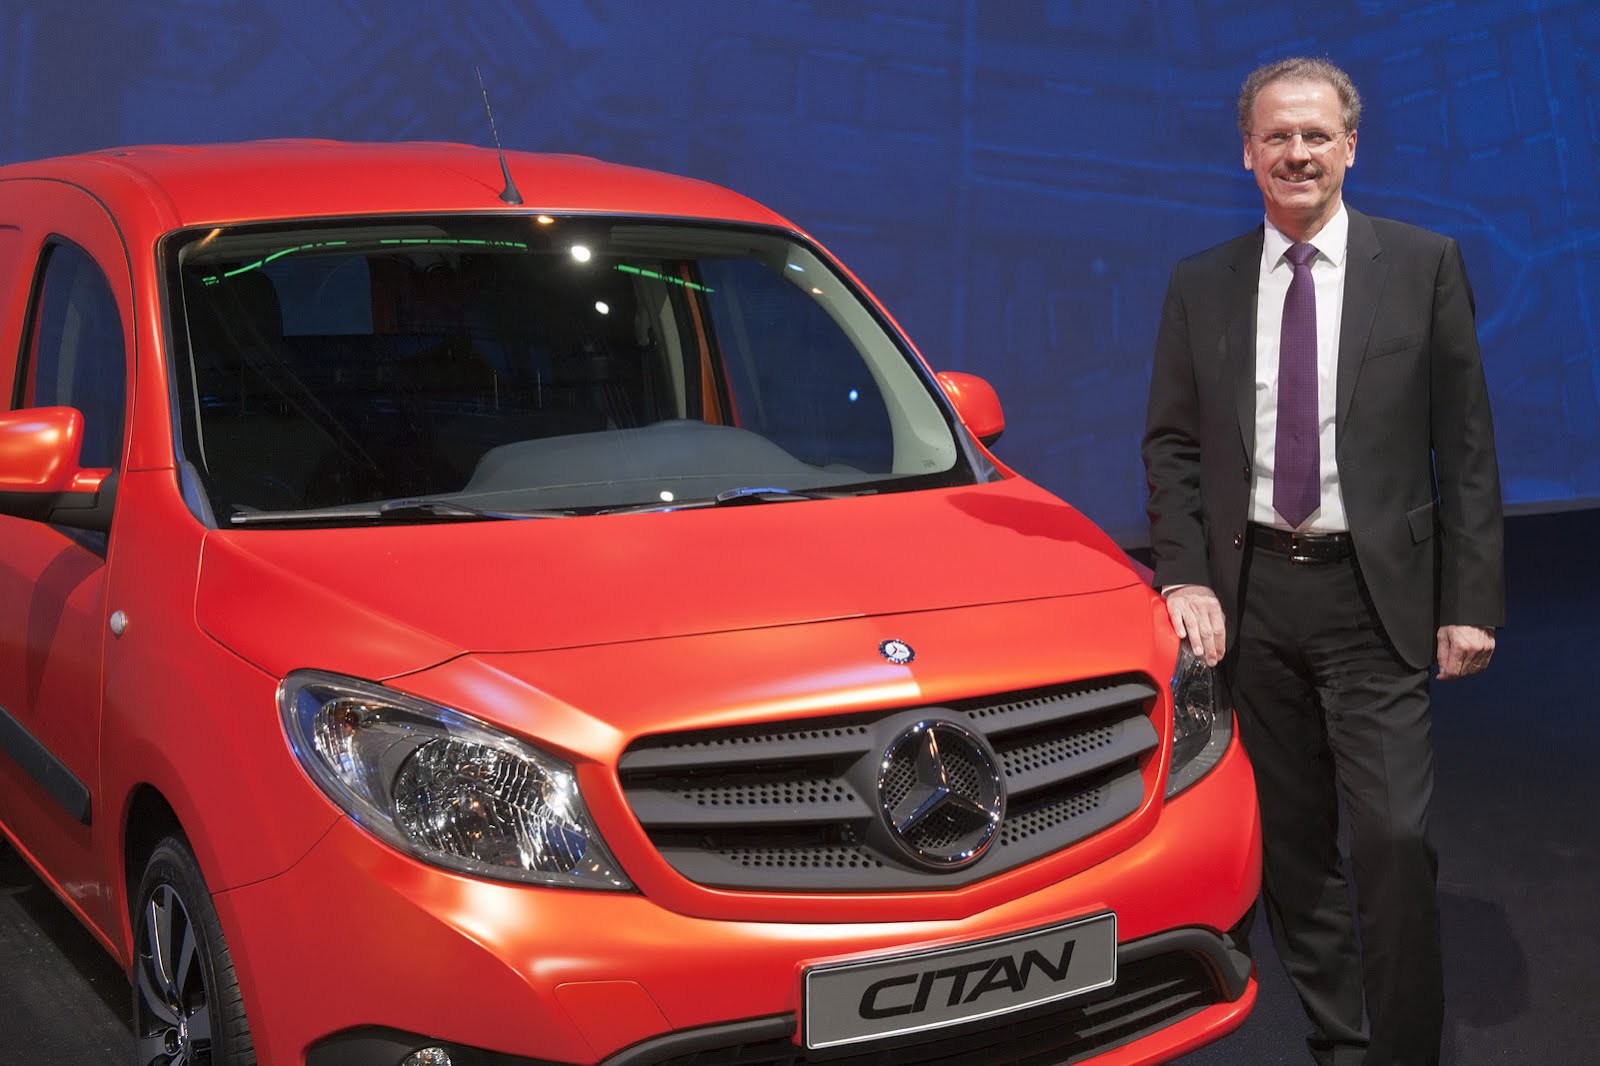 Successor Of The Mercedes-Benz Citan To Get Electric Version